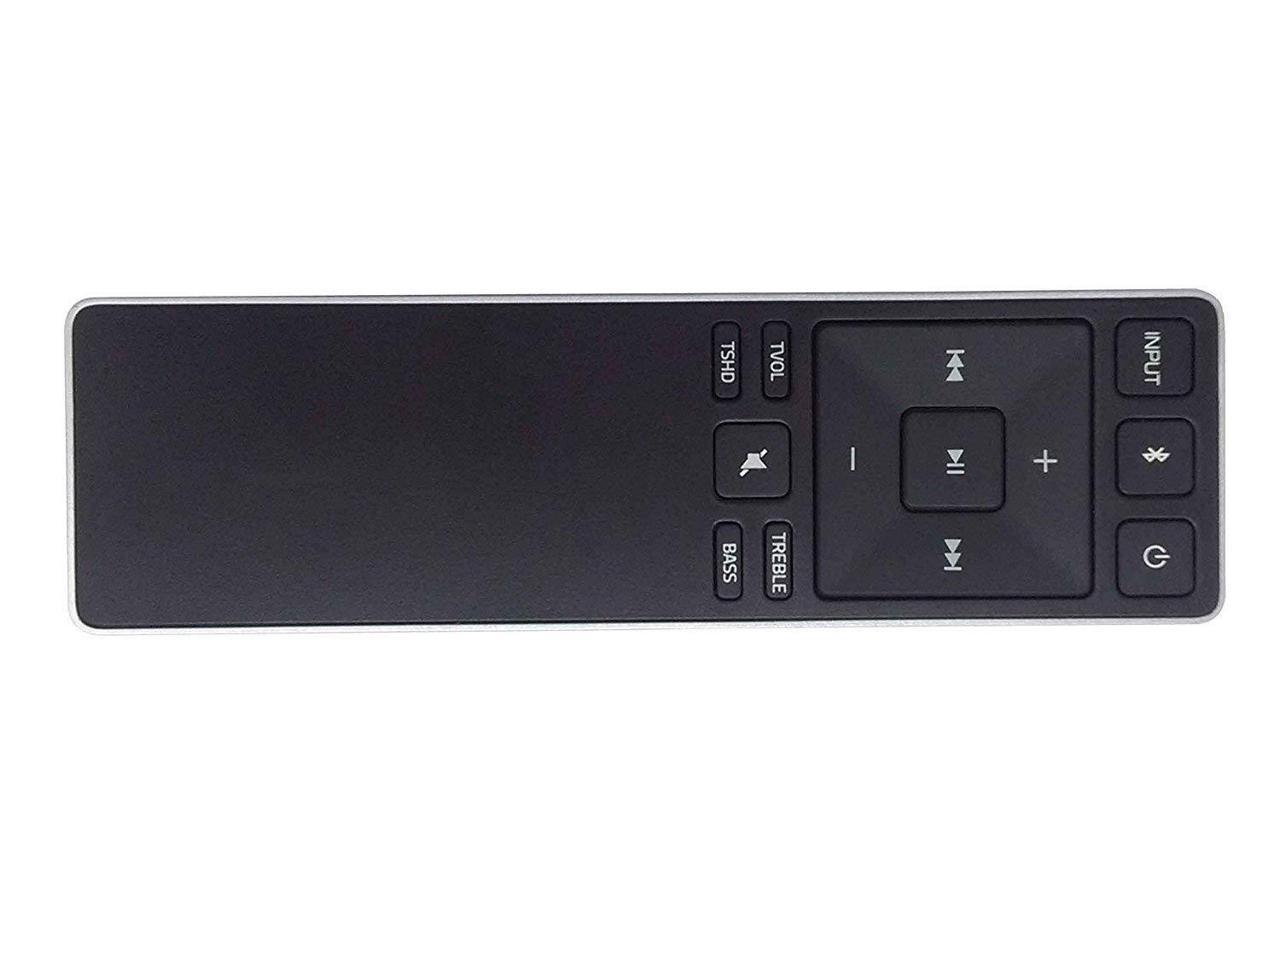 Smartby Remote Control Xrs321 C For Vizio Sound Bar Sb3820 C6 Sb3821 C6